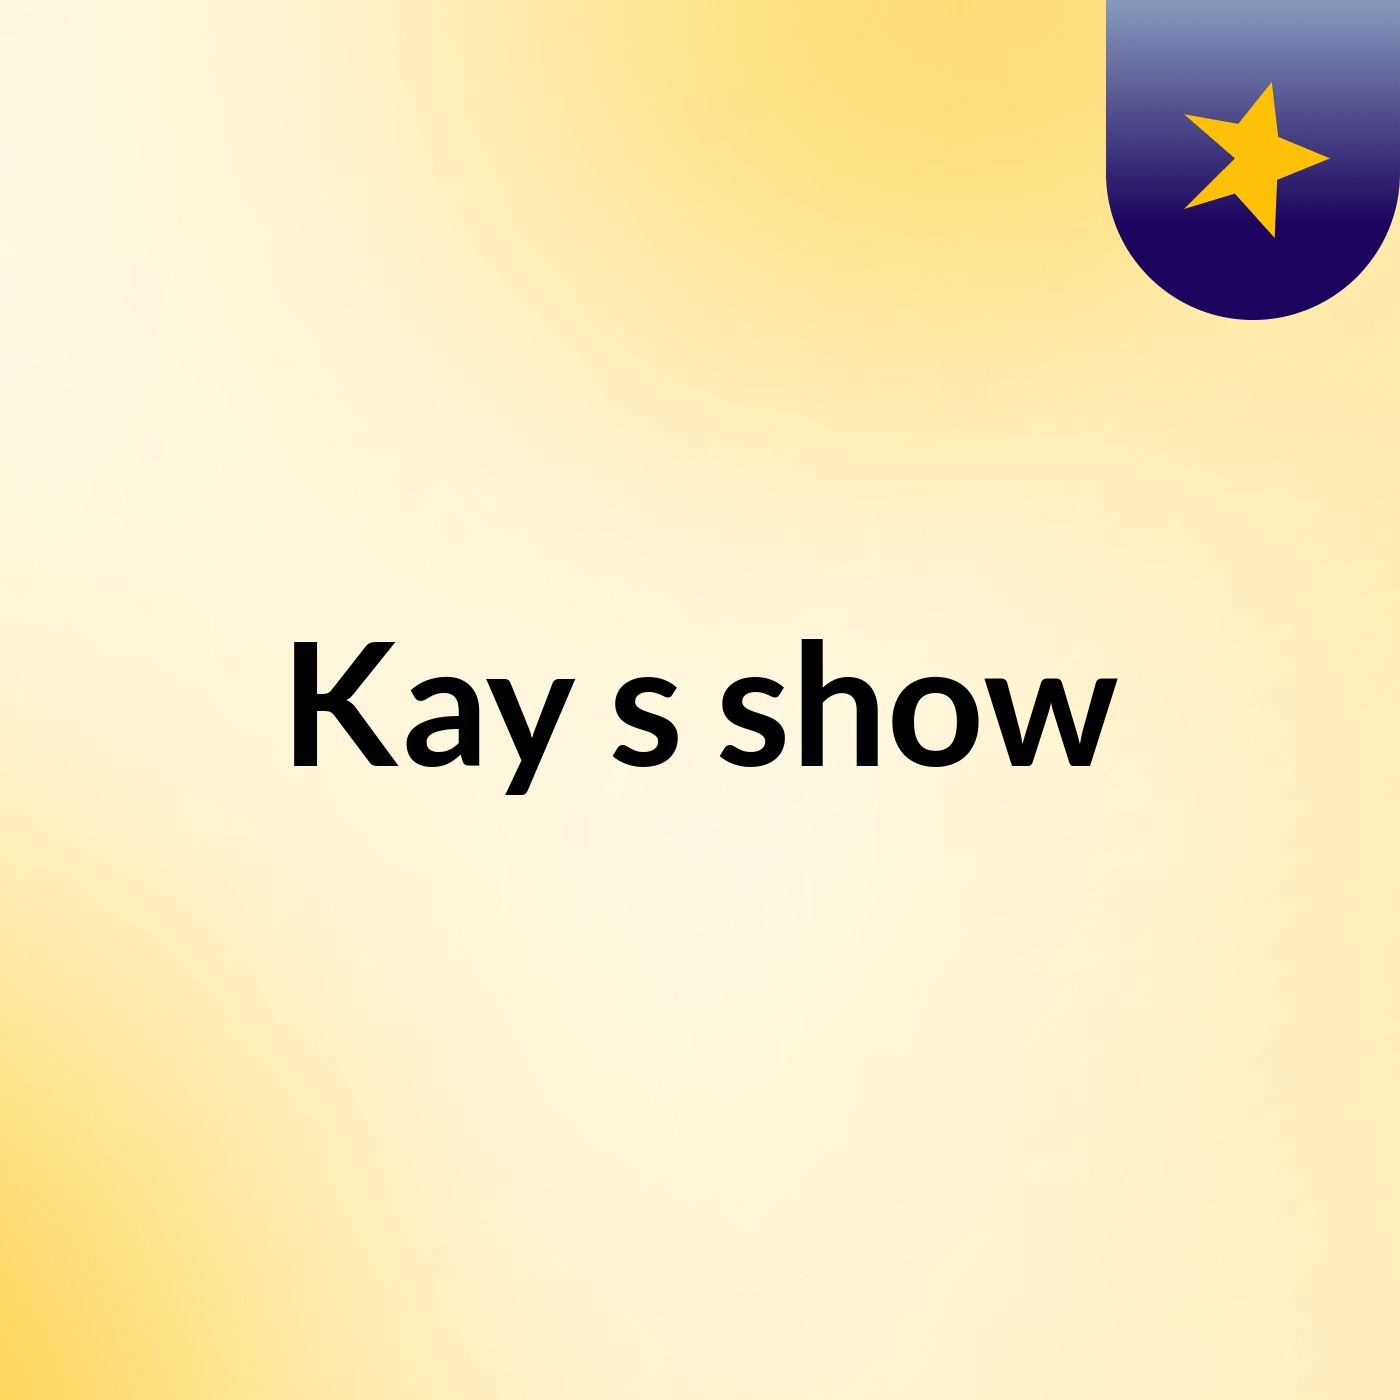 Episode 2 - p4 - Kay's show